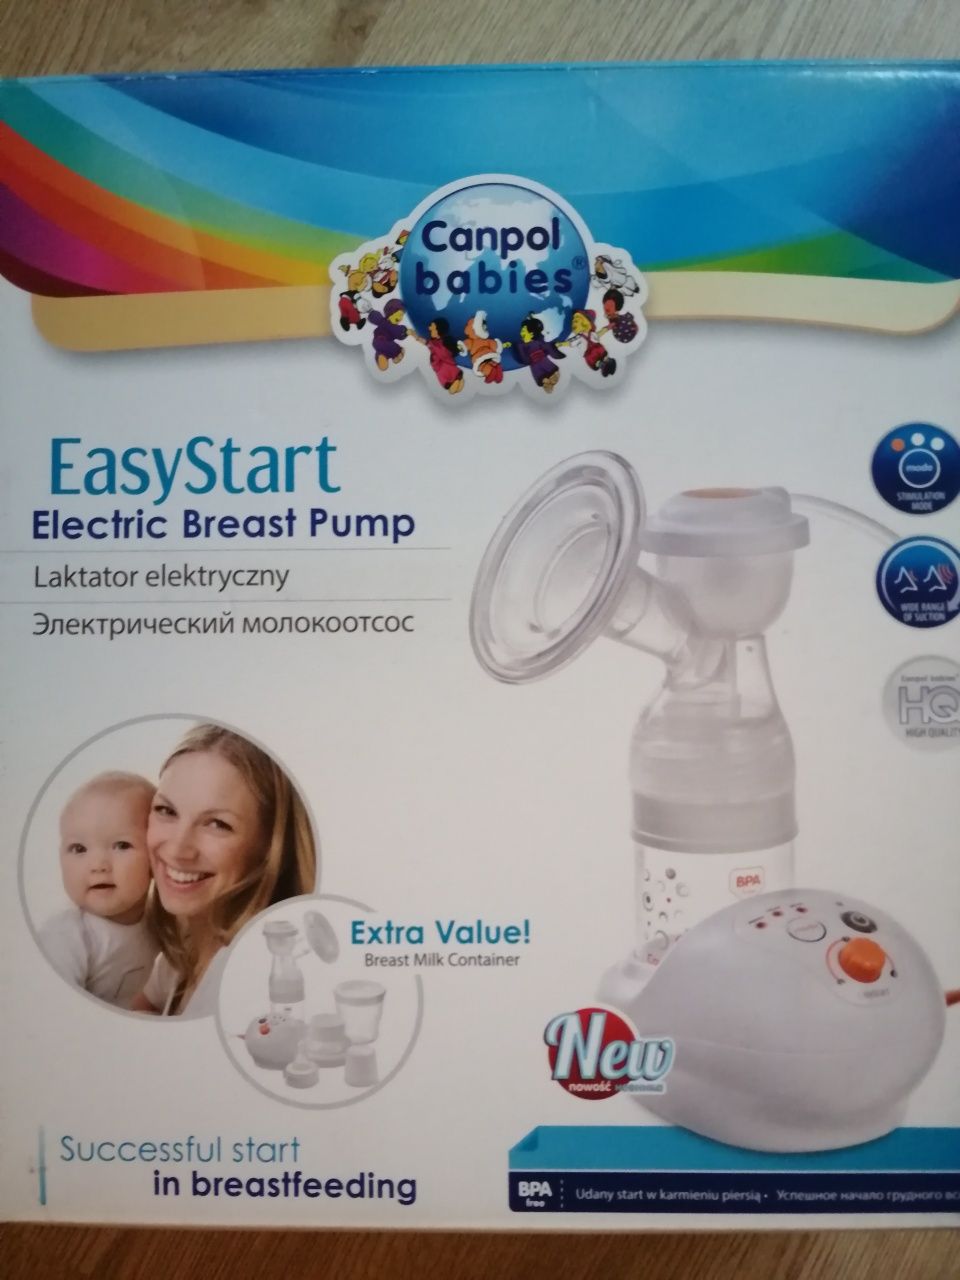 Laktator Canpol Babies EasyStart Electric Breast Pump